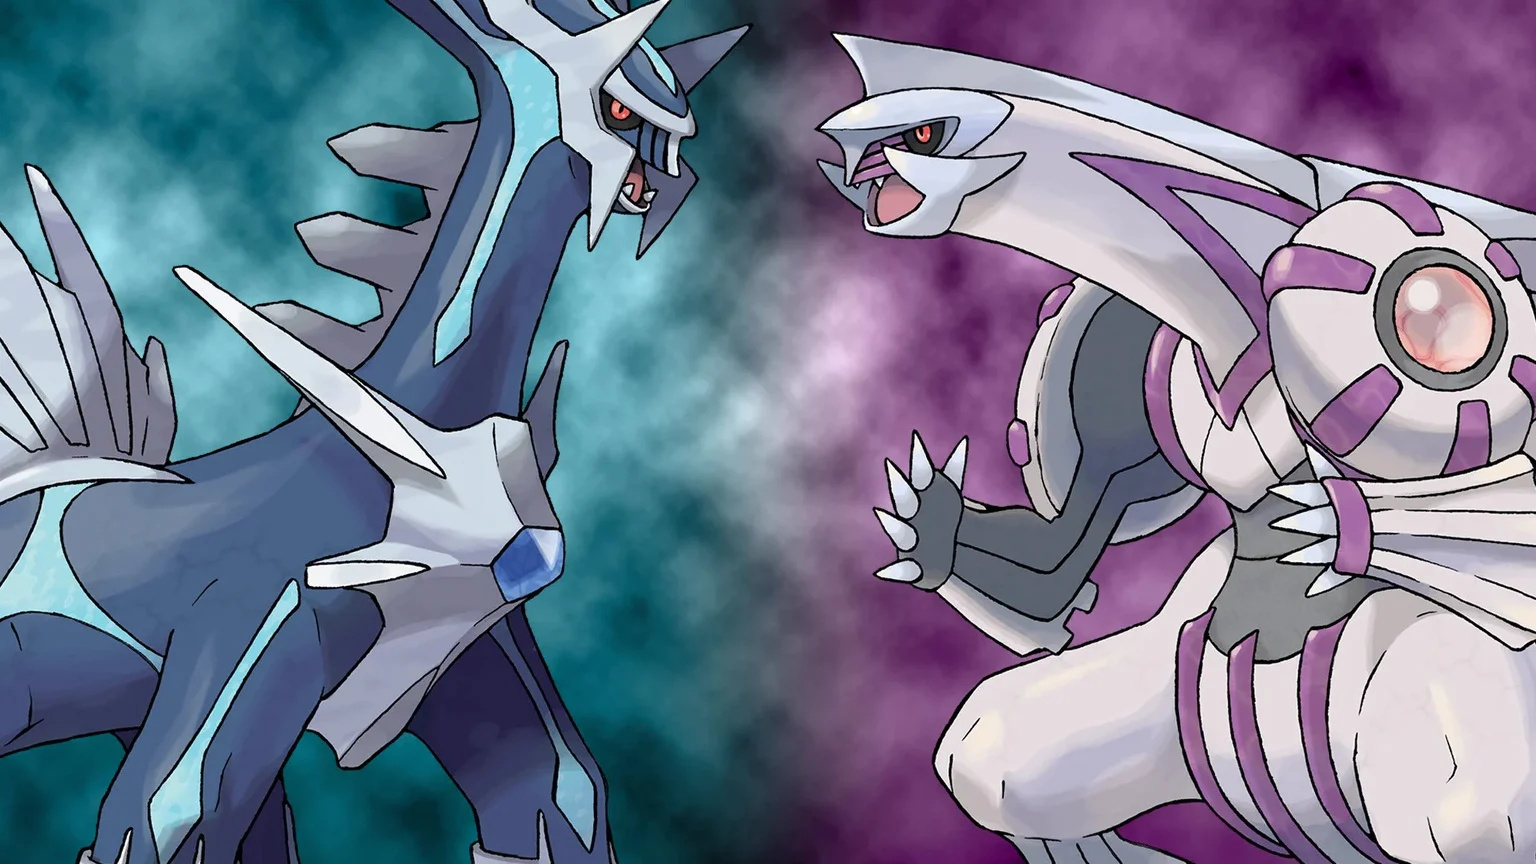 The Gen IV Legendary Pokémon Dialga and Palkia.